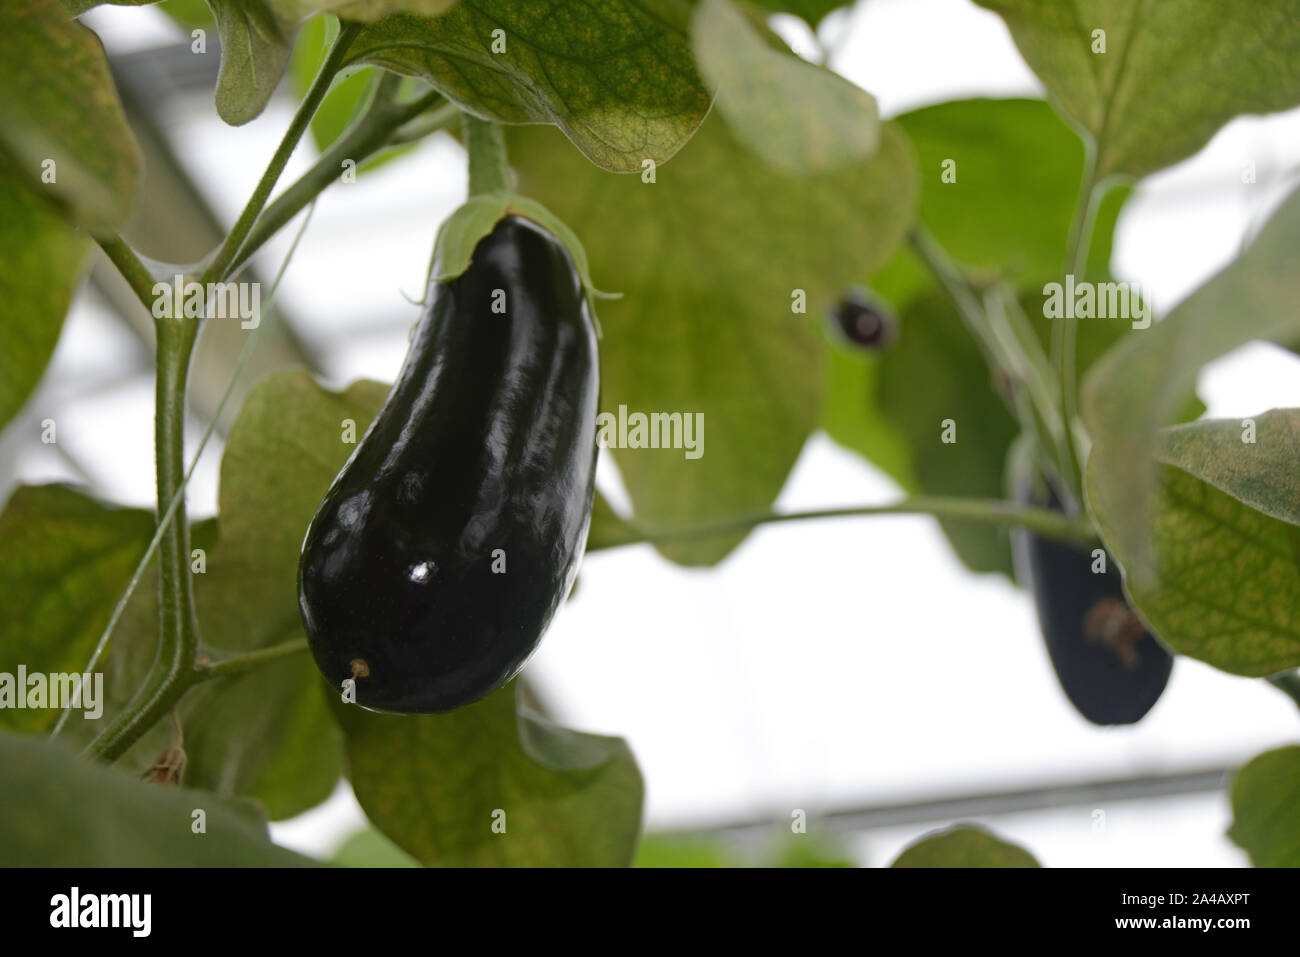 A commercial tunnelhouse growing eggplant, aubergine, or brinjal (Solanum melongena) for the wholesale market. Stock Photo